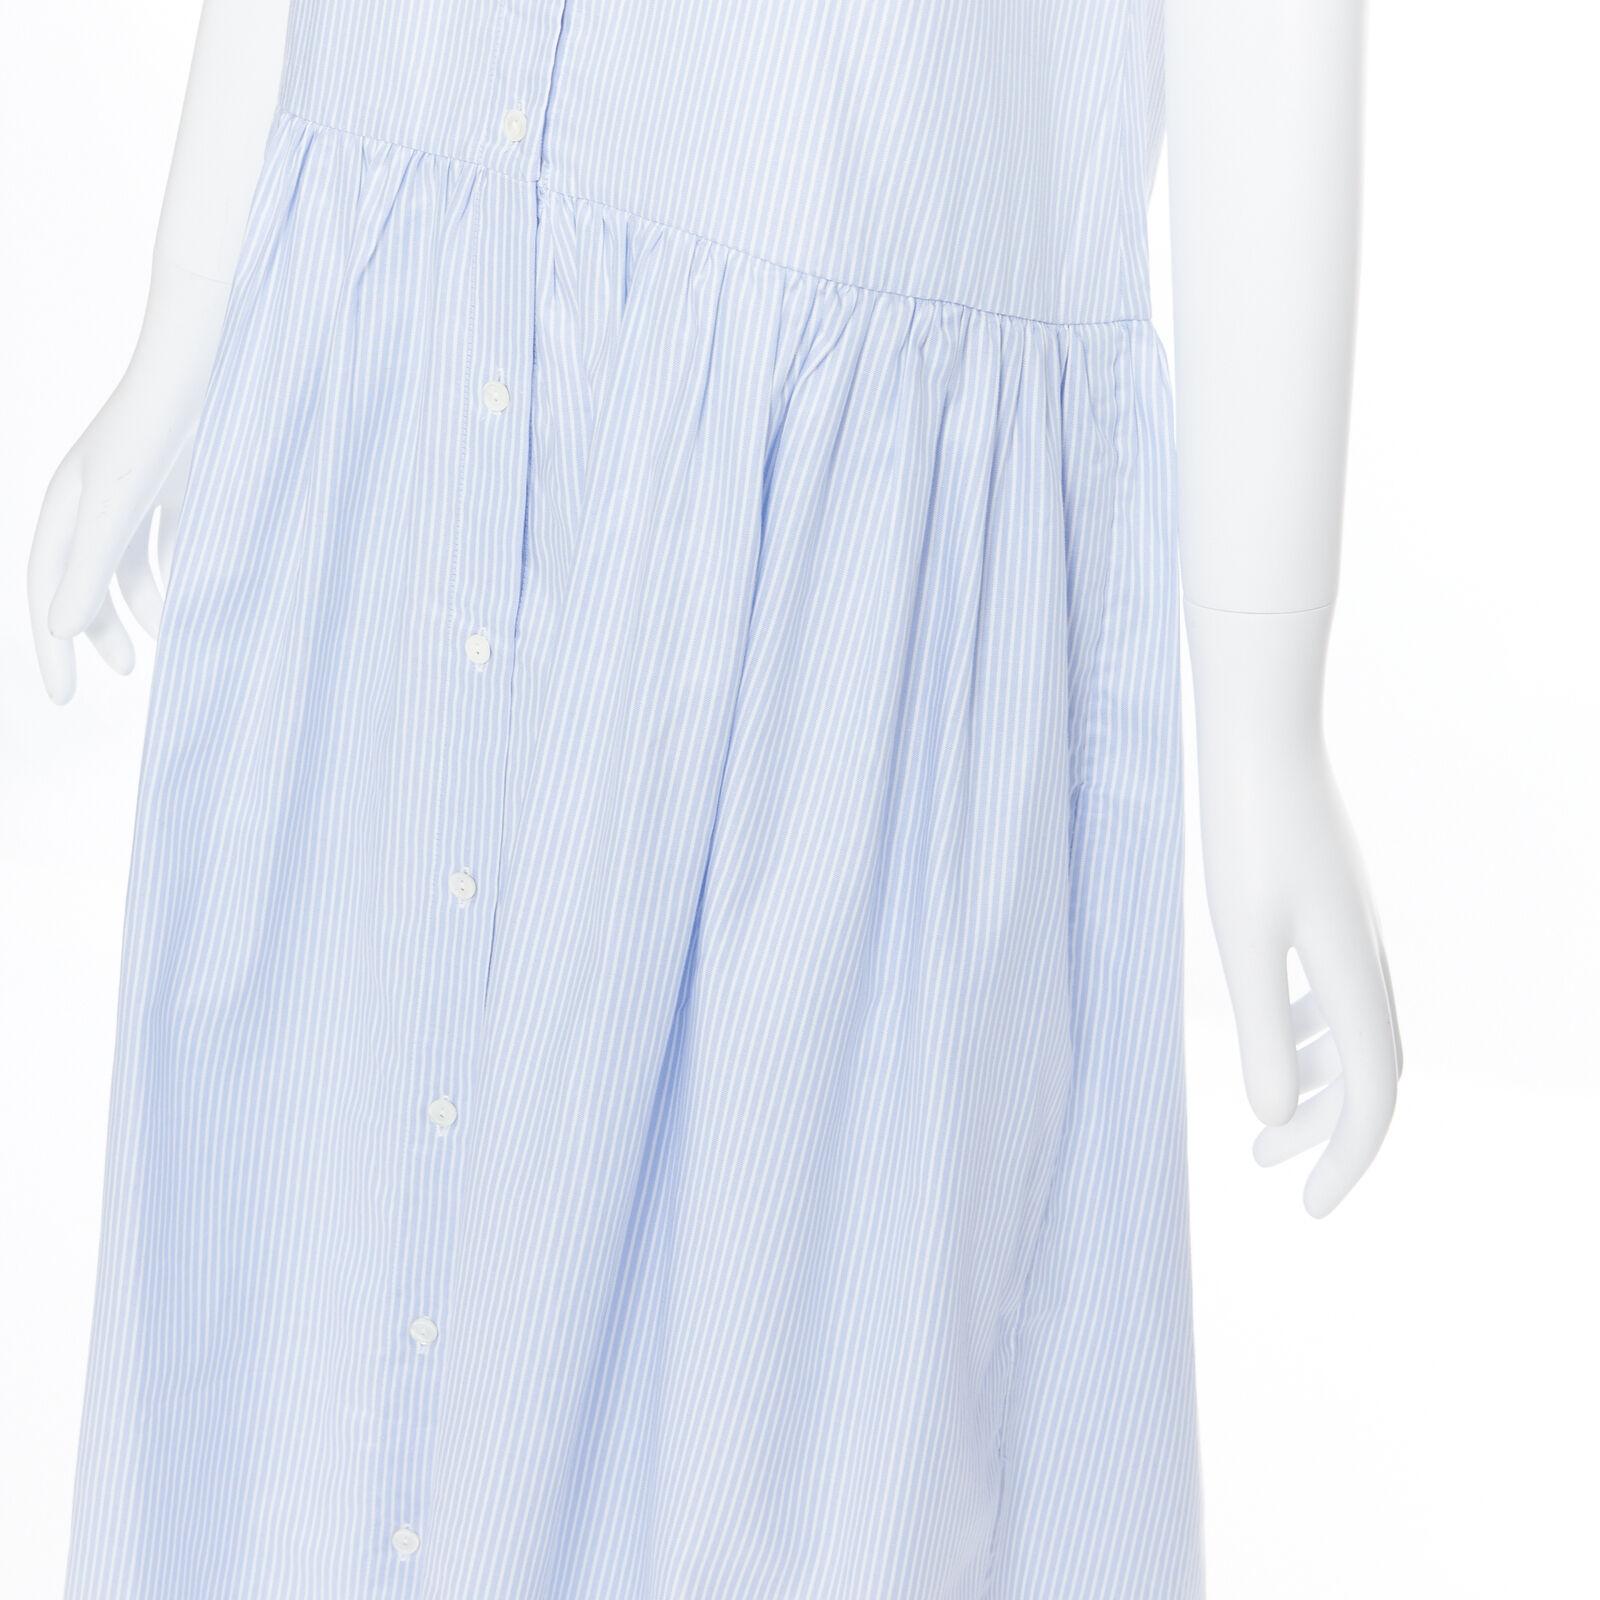 PALMER HARDING 100% cotton white bib front blue striped summer dress UK8 XS For Sale 5